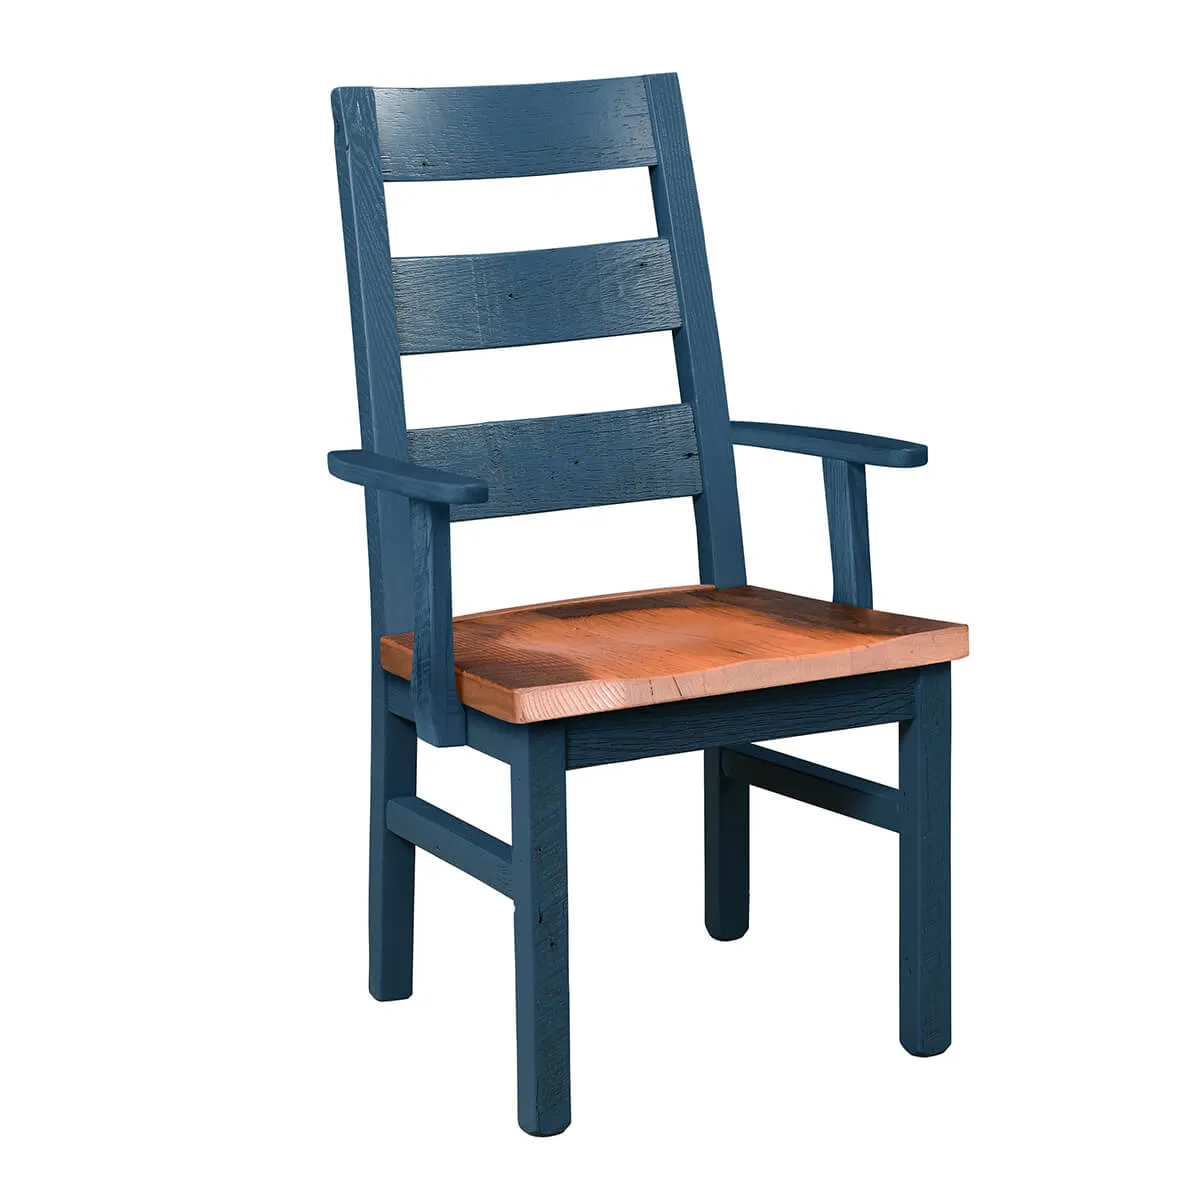 Brighthouse Arm Chair